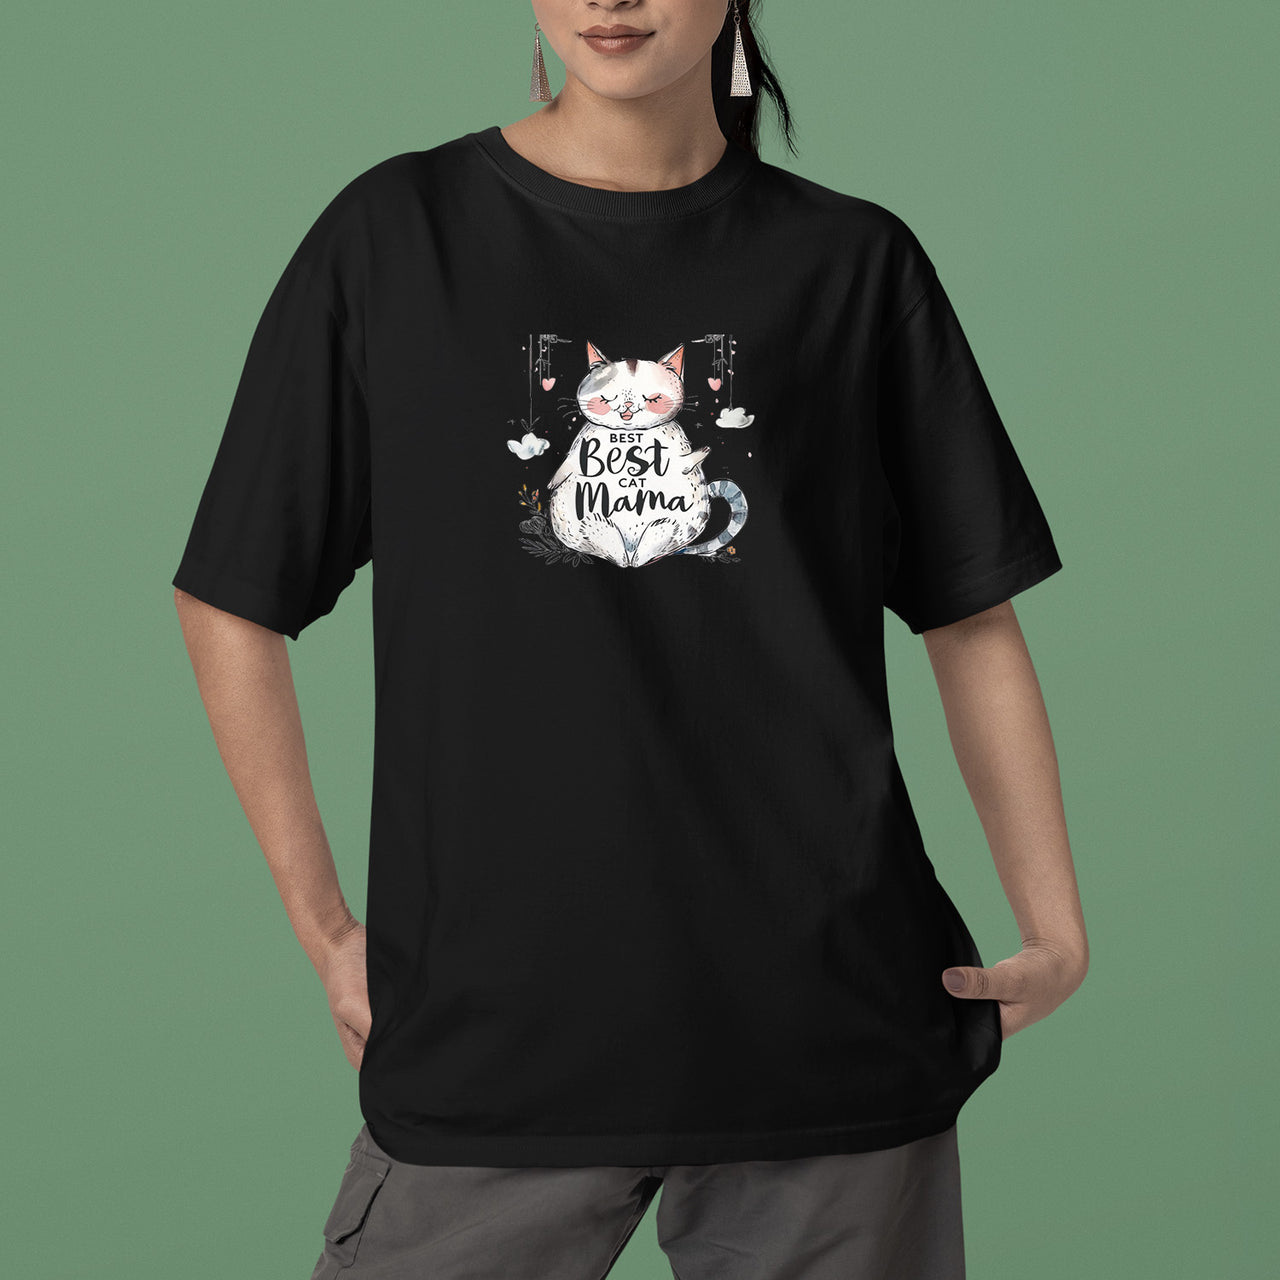 Best Cat Mama Shirt, Pet Lover Shirt, Cat Lover Shirt, Best Cat Mom Ever, Cat Owner Shirt, Gift For Cat Mom, Funny Cat Shirts, Women Cat T-Shirt, Mother's Day Gift, Cat Lover Wife Gifts, Cat Shirt